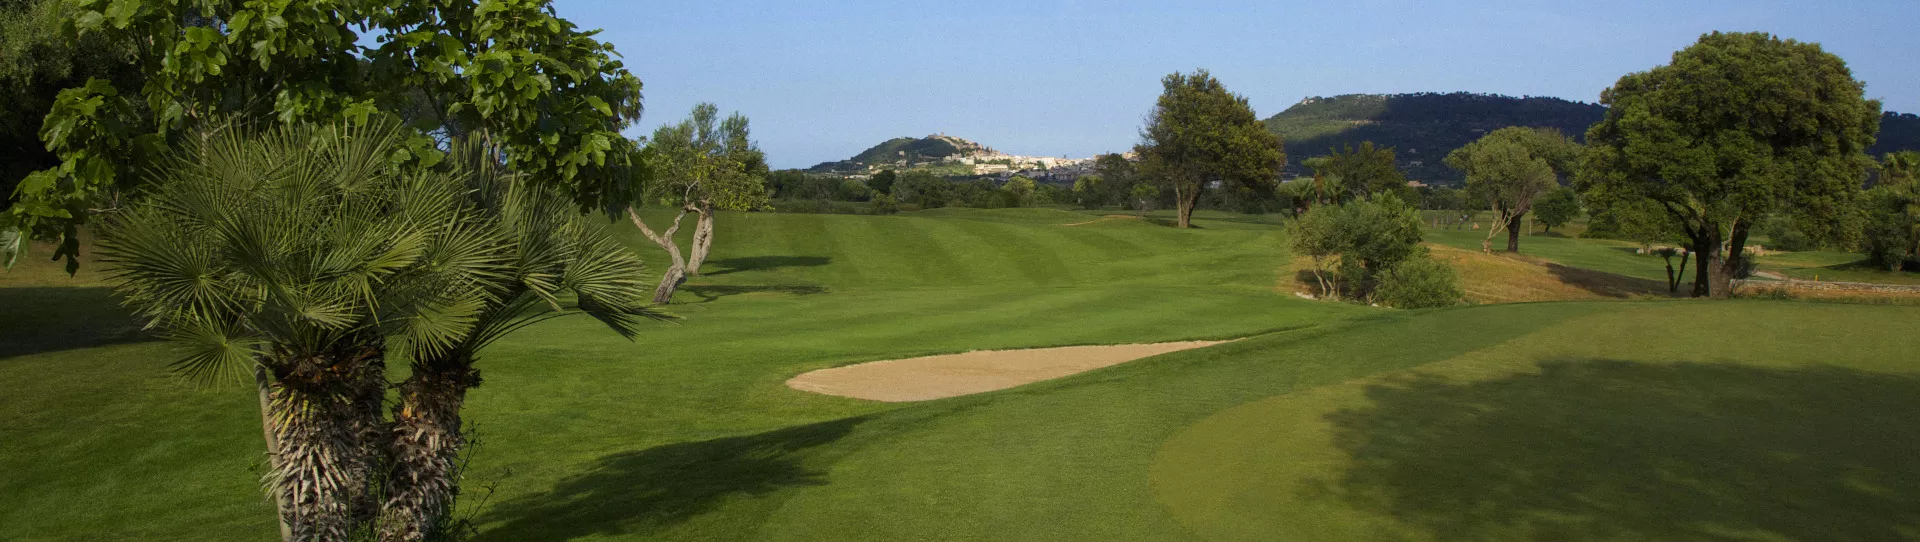 Spain golf holidays - Gem Golf Package - Photo 3